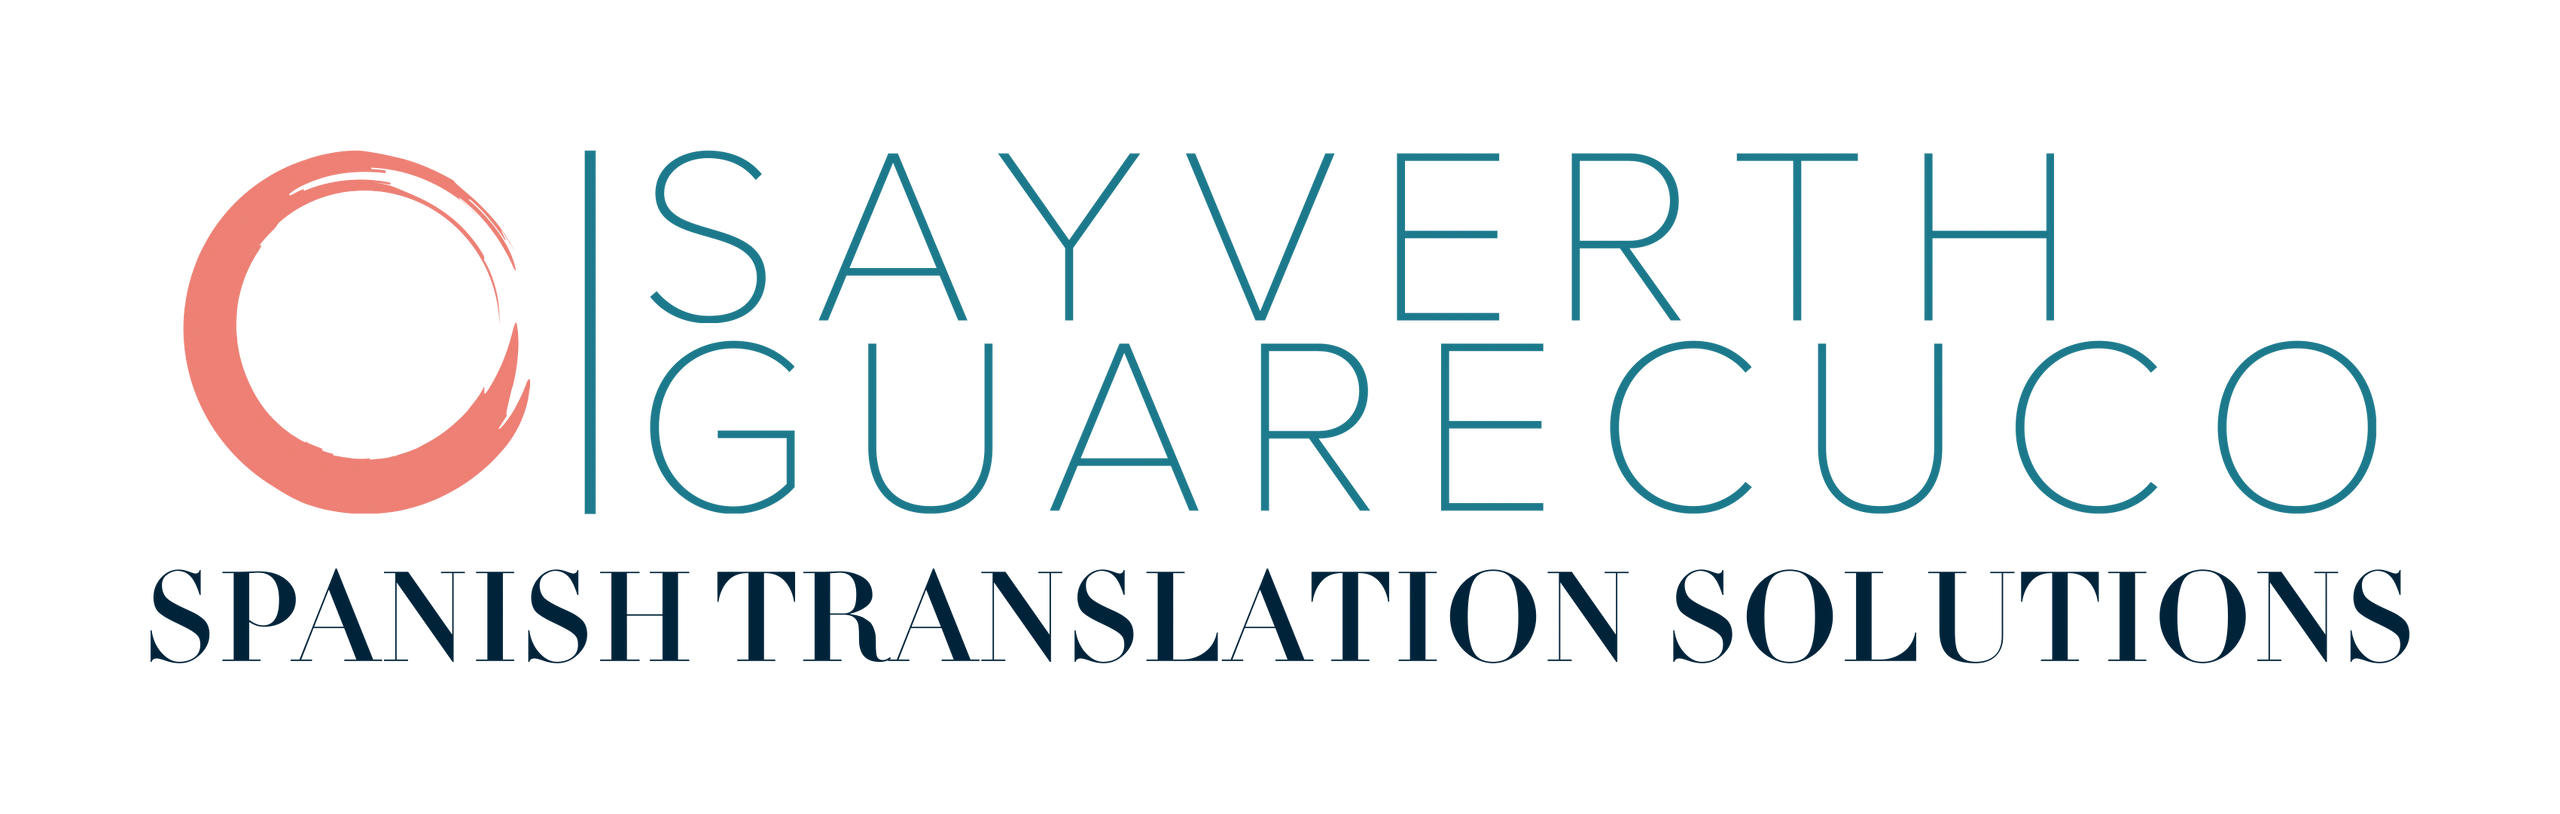 Professional Spanish translation Orlando - Spanish Translator, Interpreter